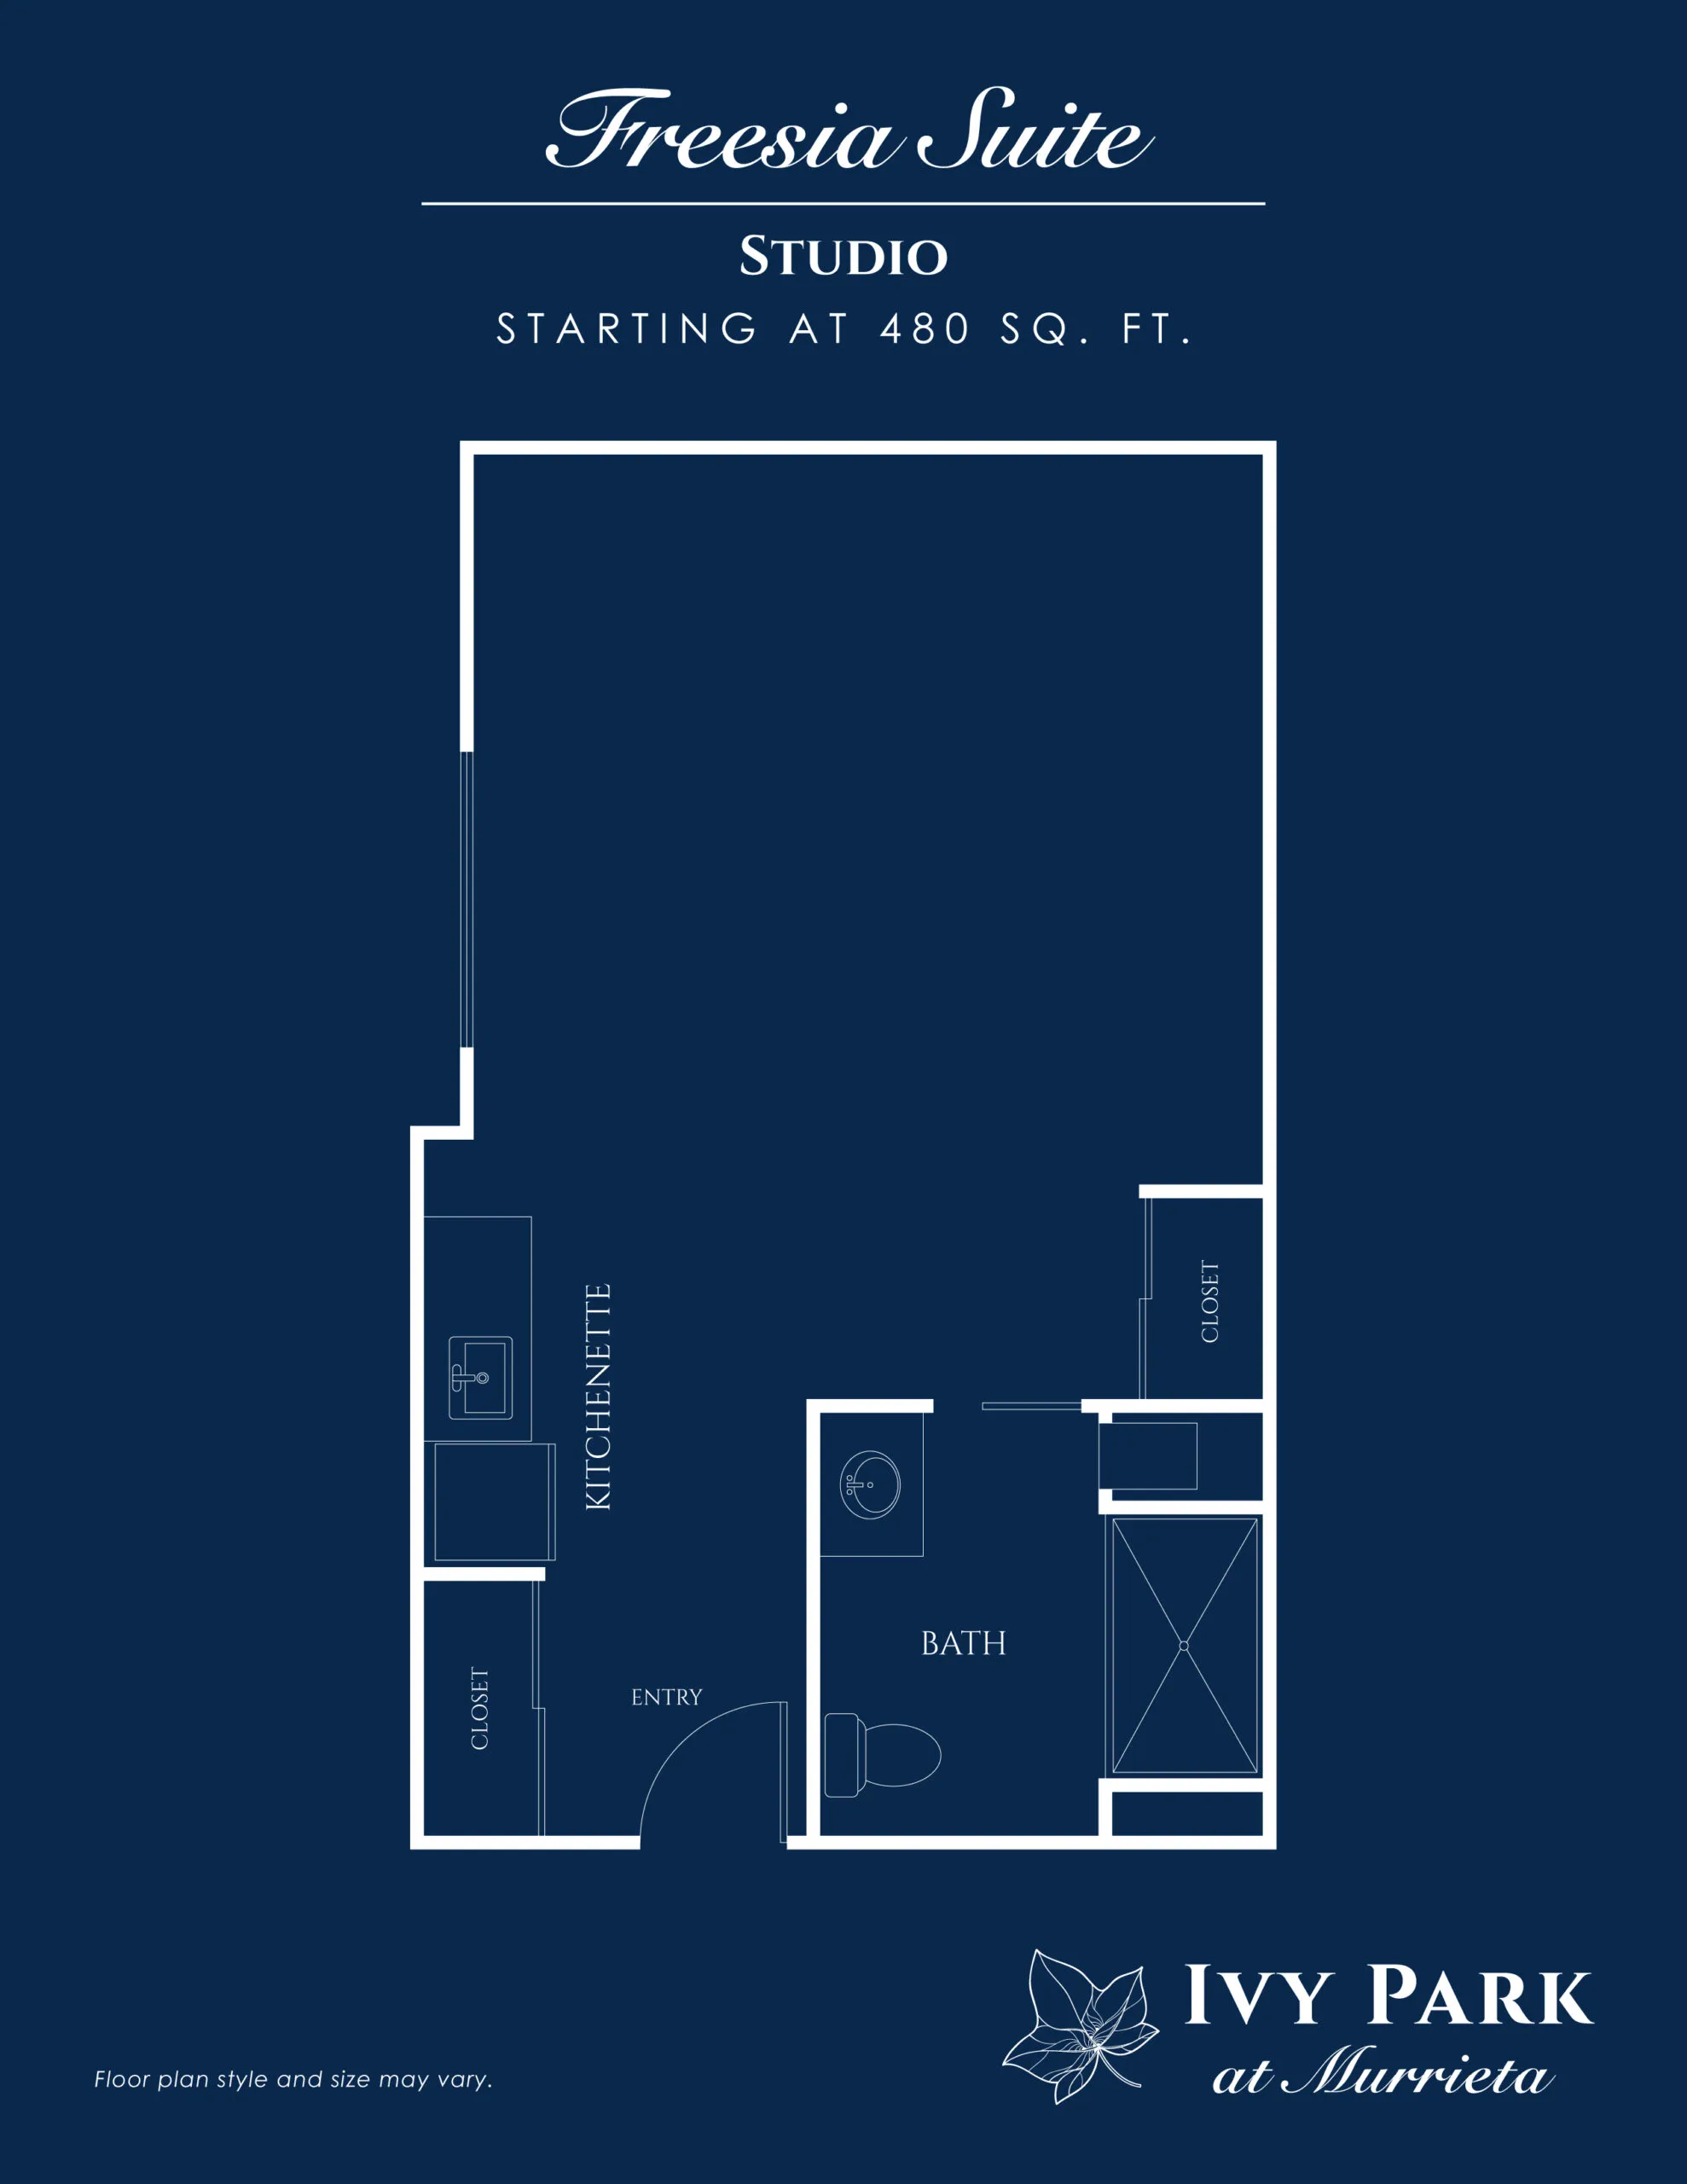 Freesia Suite floor plan